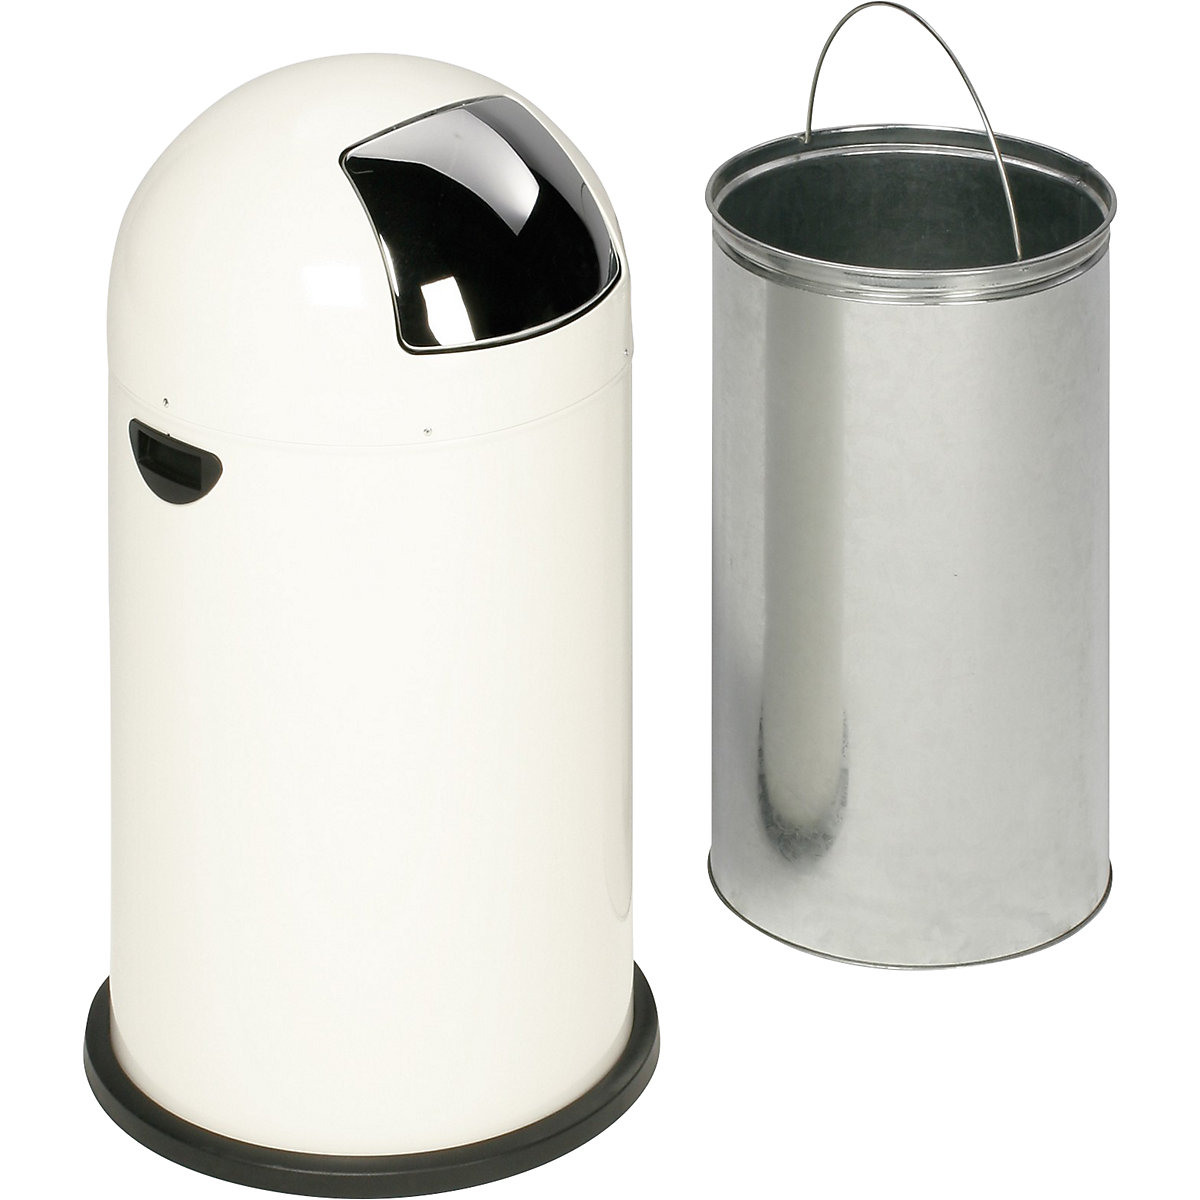 VAR – Coș de gunoi cu capac rabatabil (Imagine produs 3)